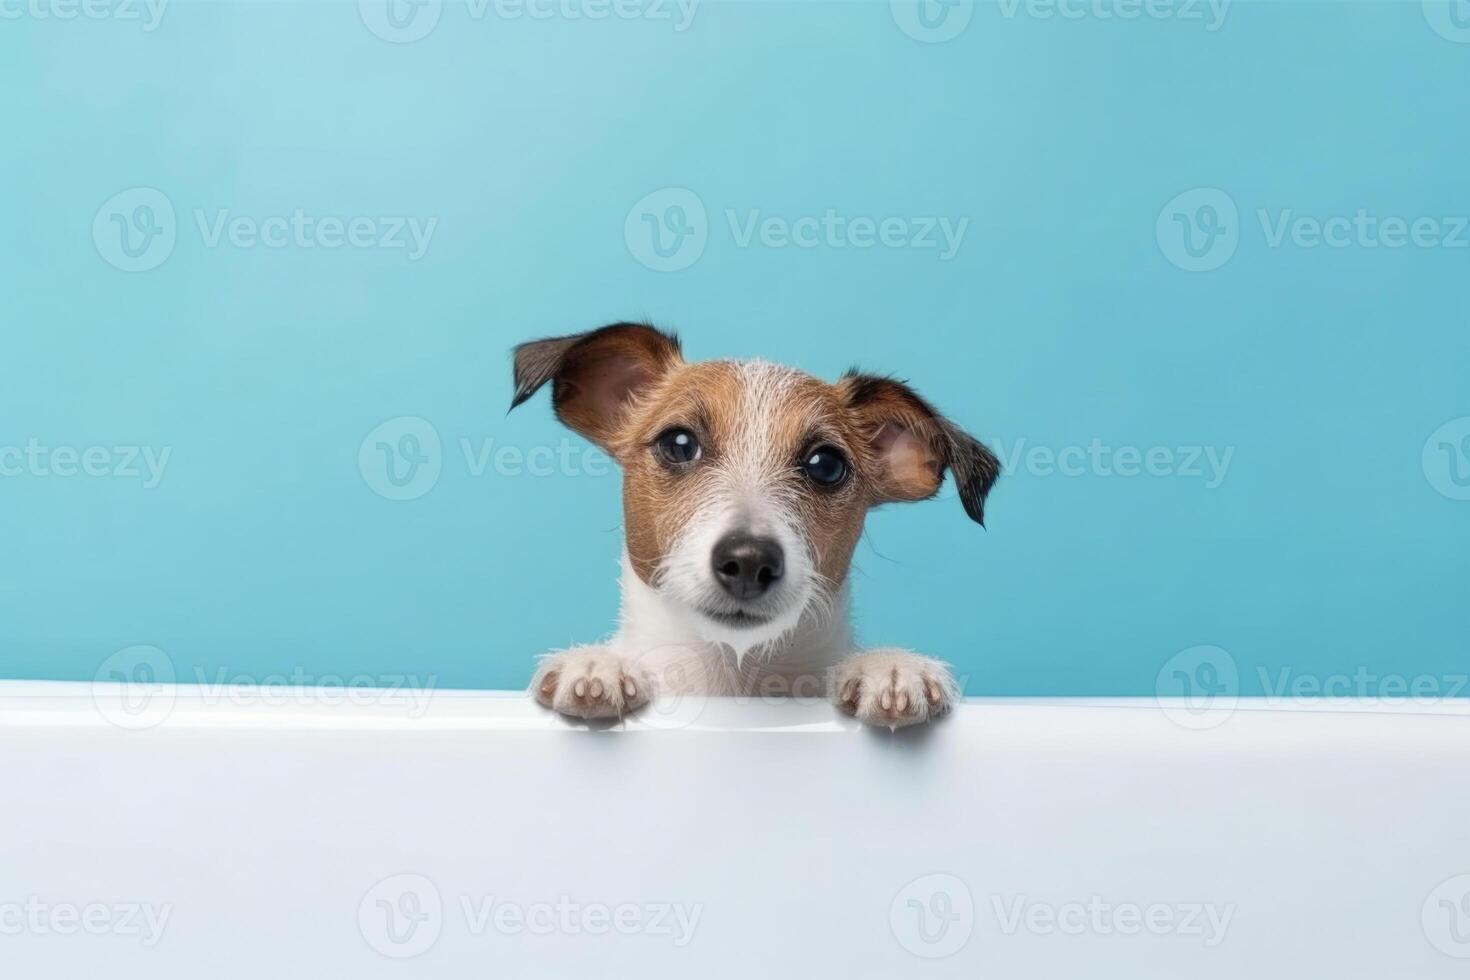 Washing pet. Cute dog in bath on blue background. photo